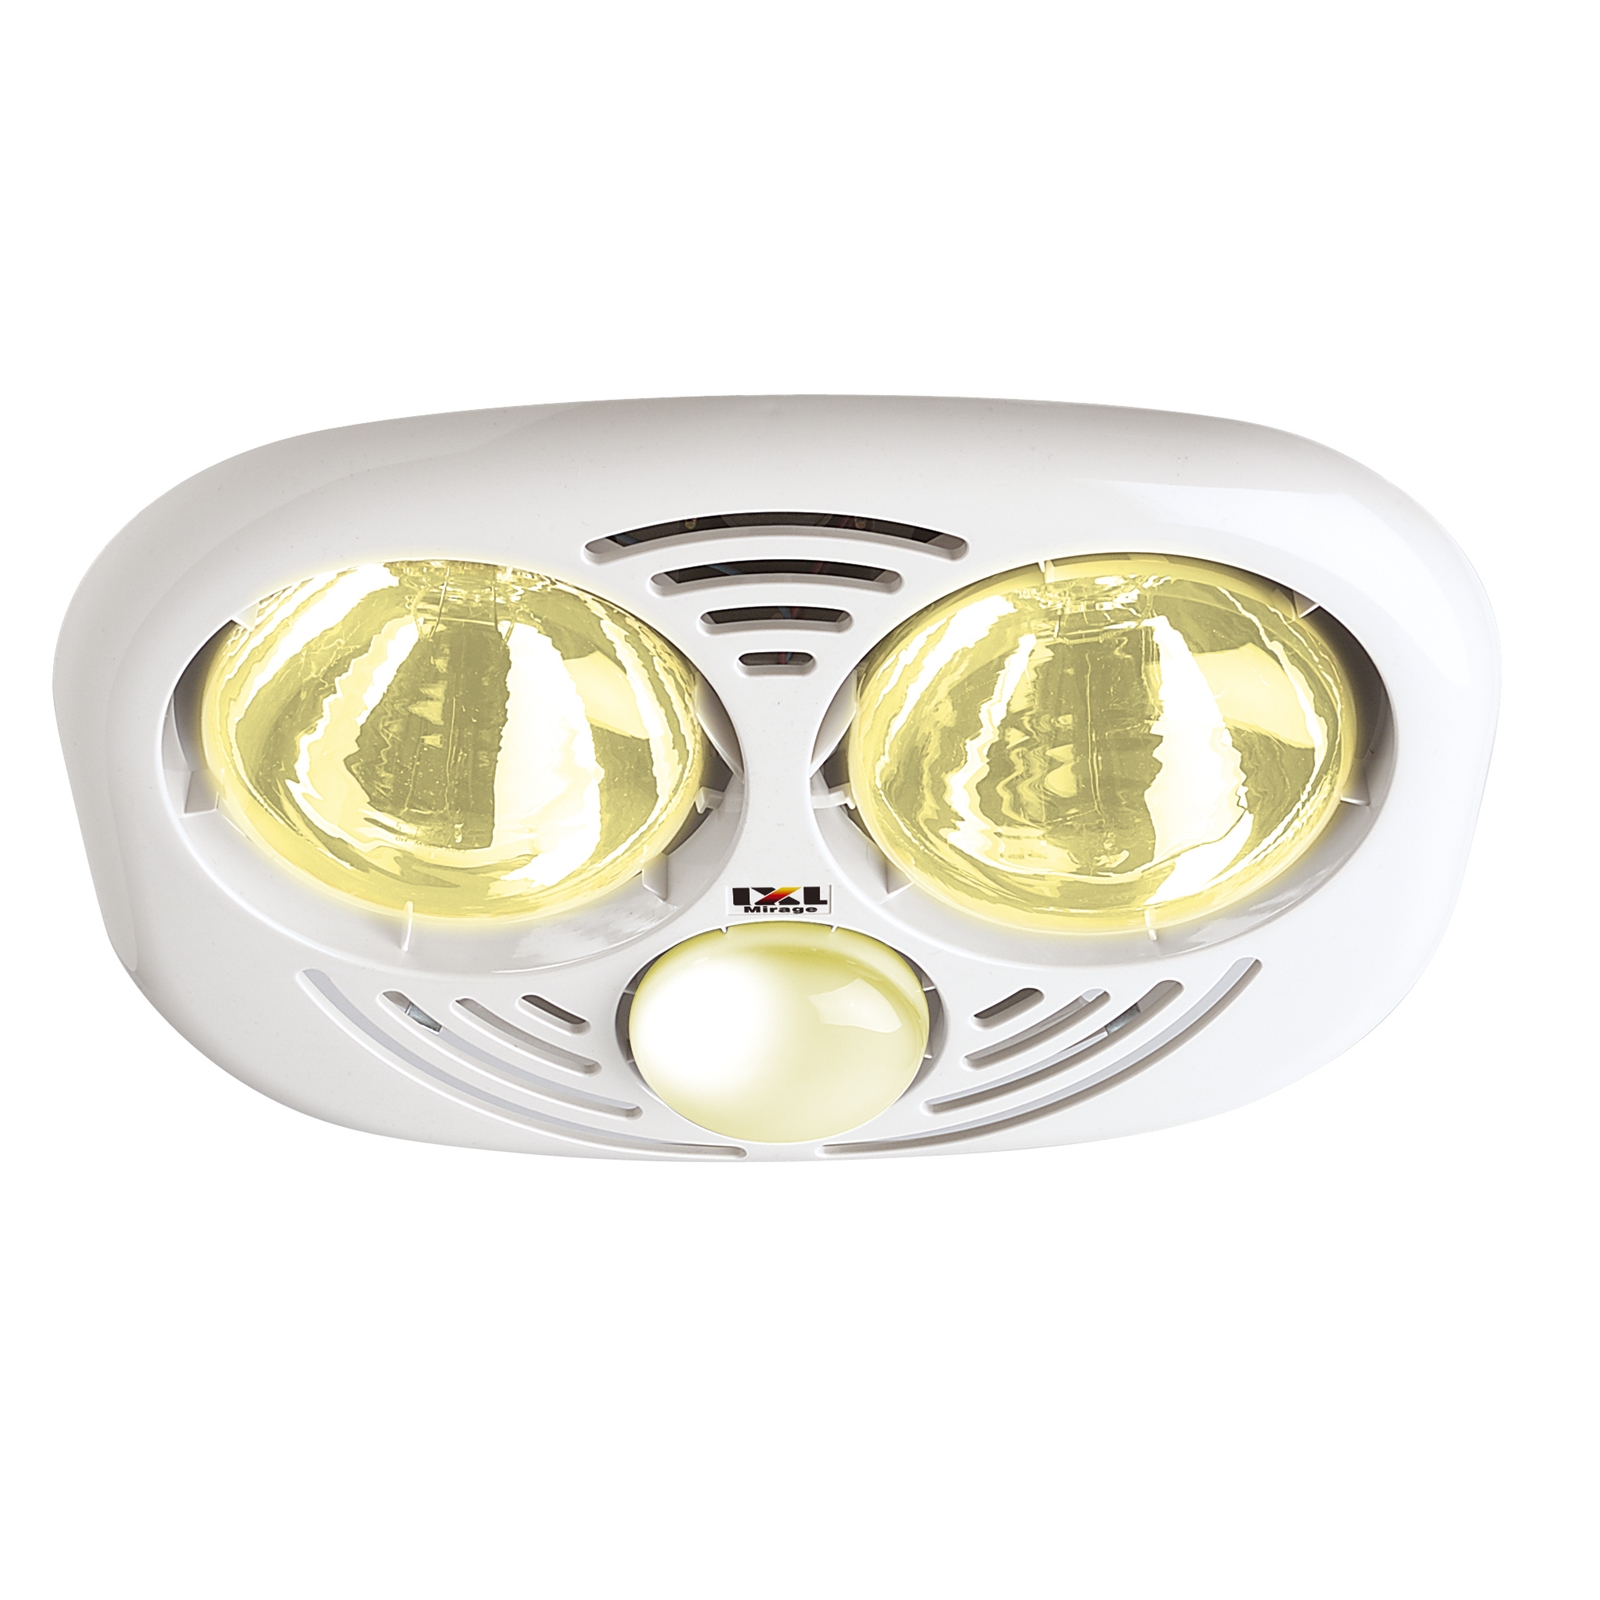 IXL 3 IN 1 Mirage Bathroom Heater 2x 275W Heat Lamps